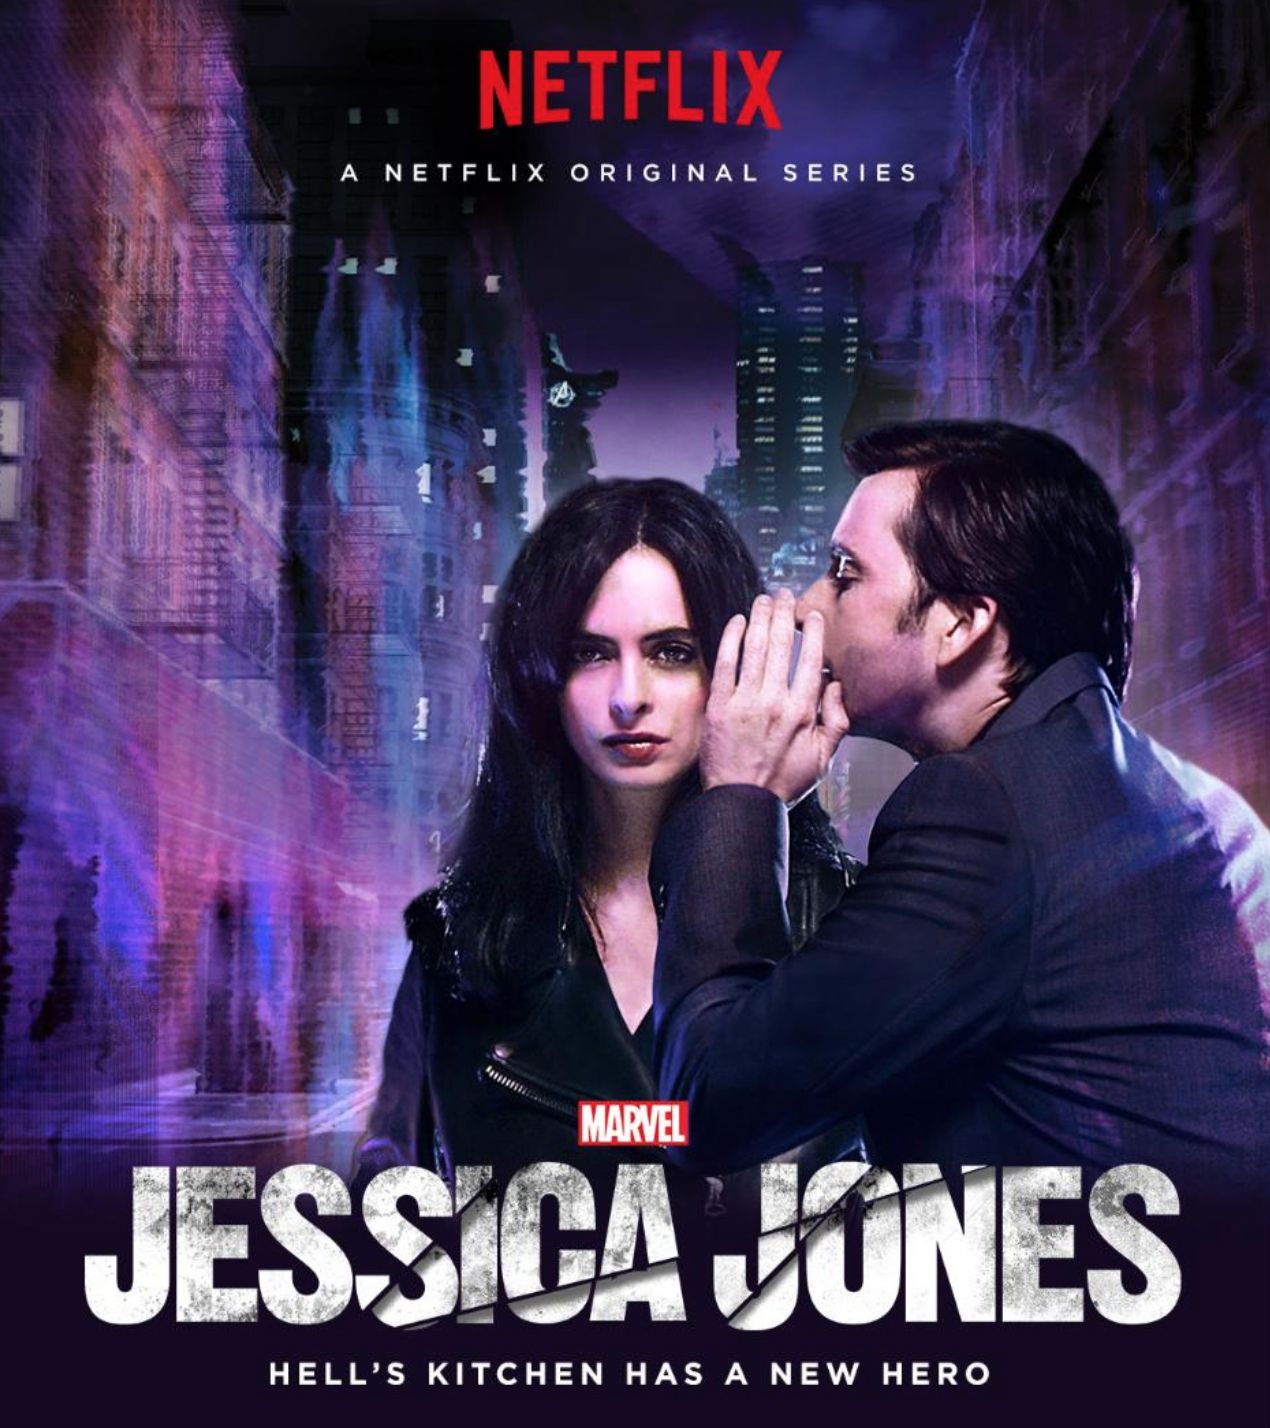 Jessica Jones Poster with Krysten Ritter and David Tennant